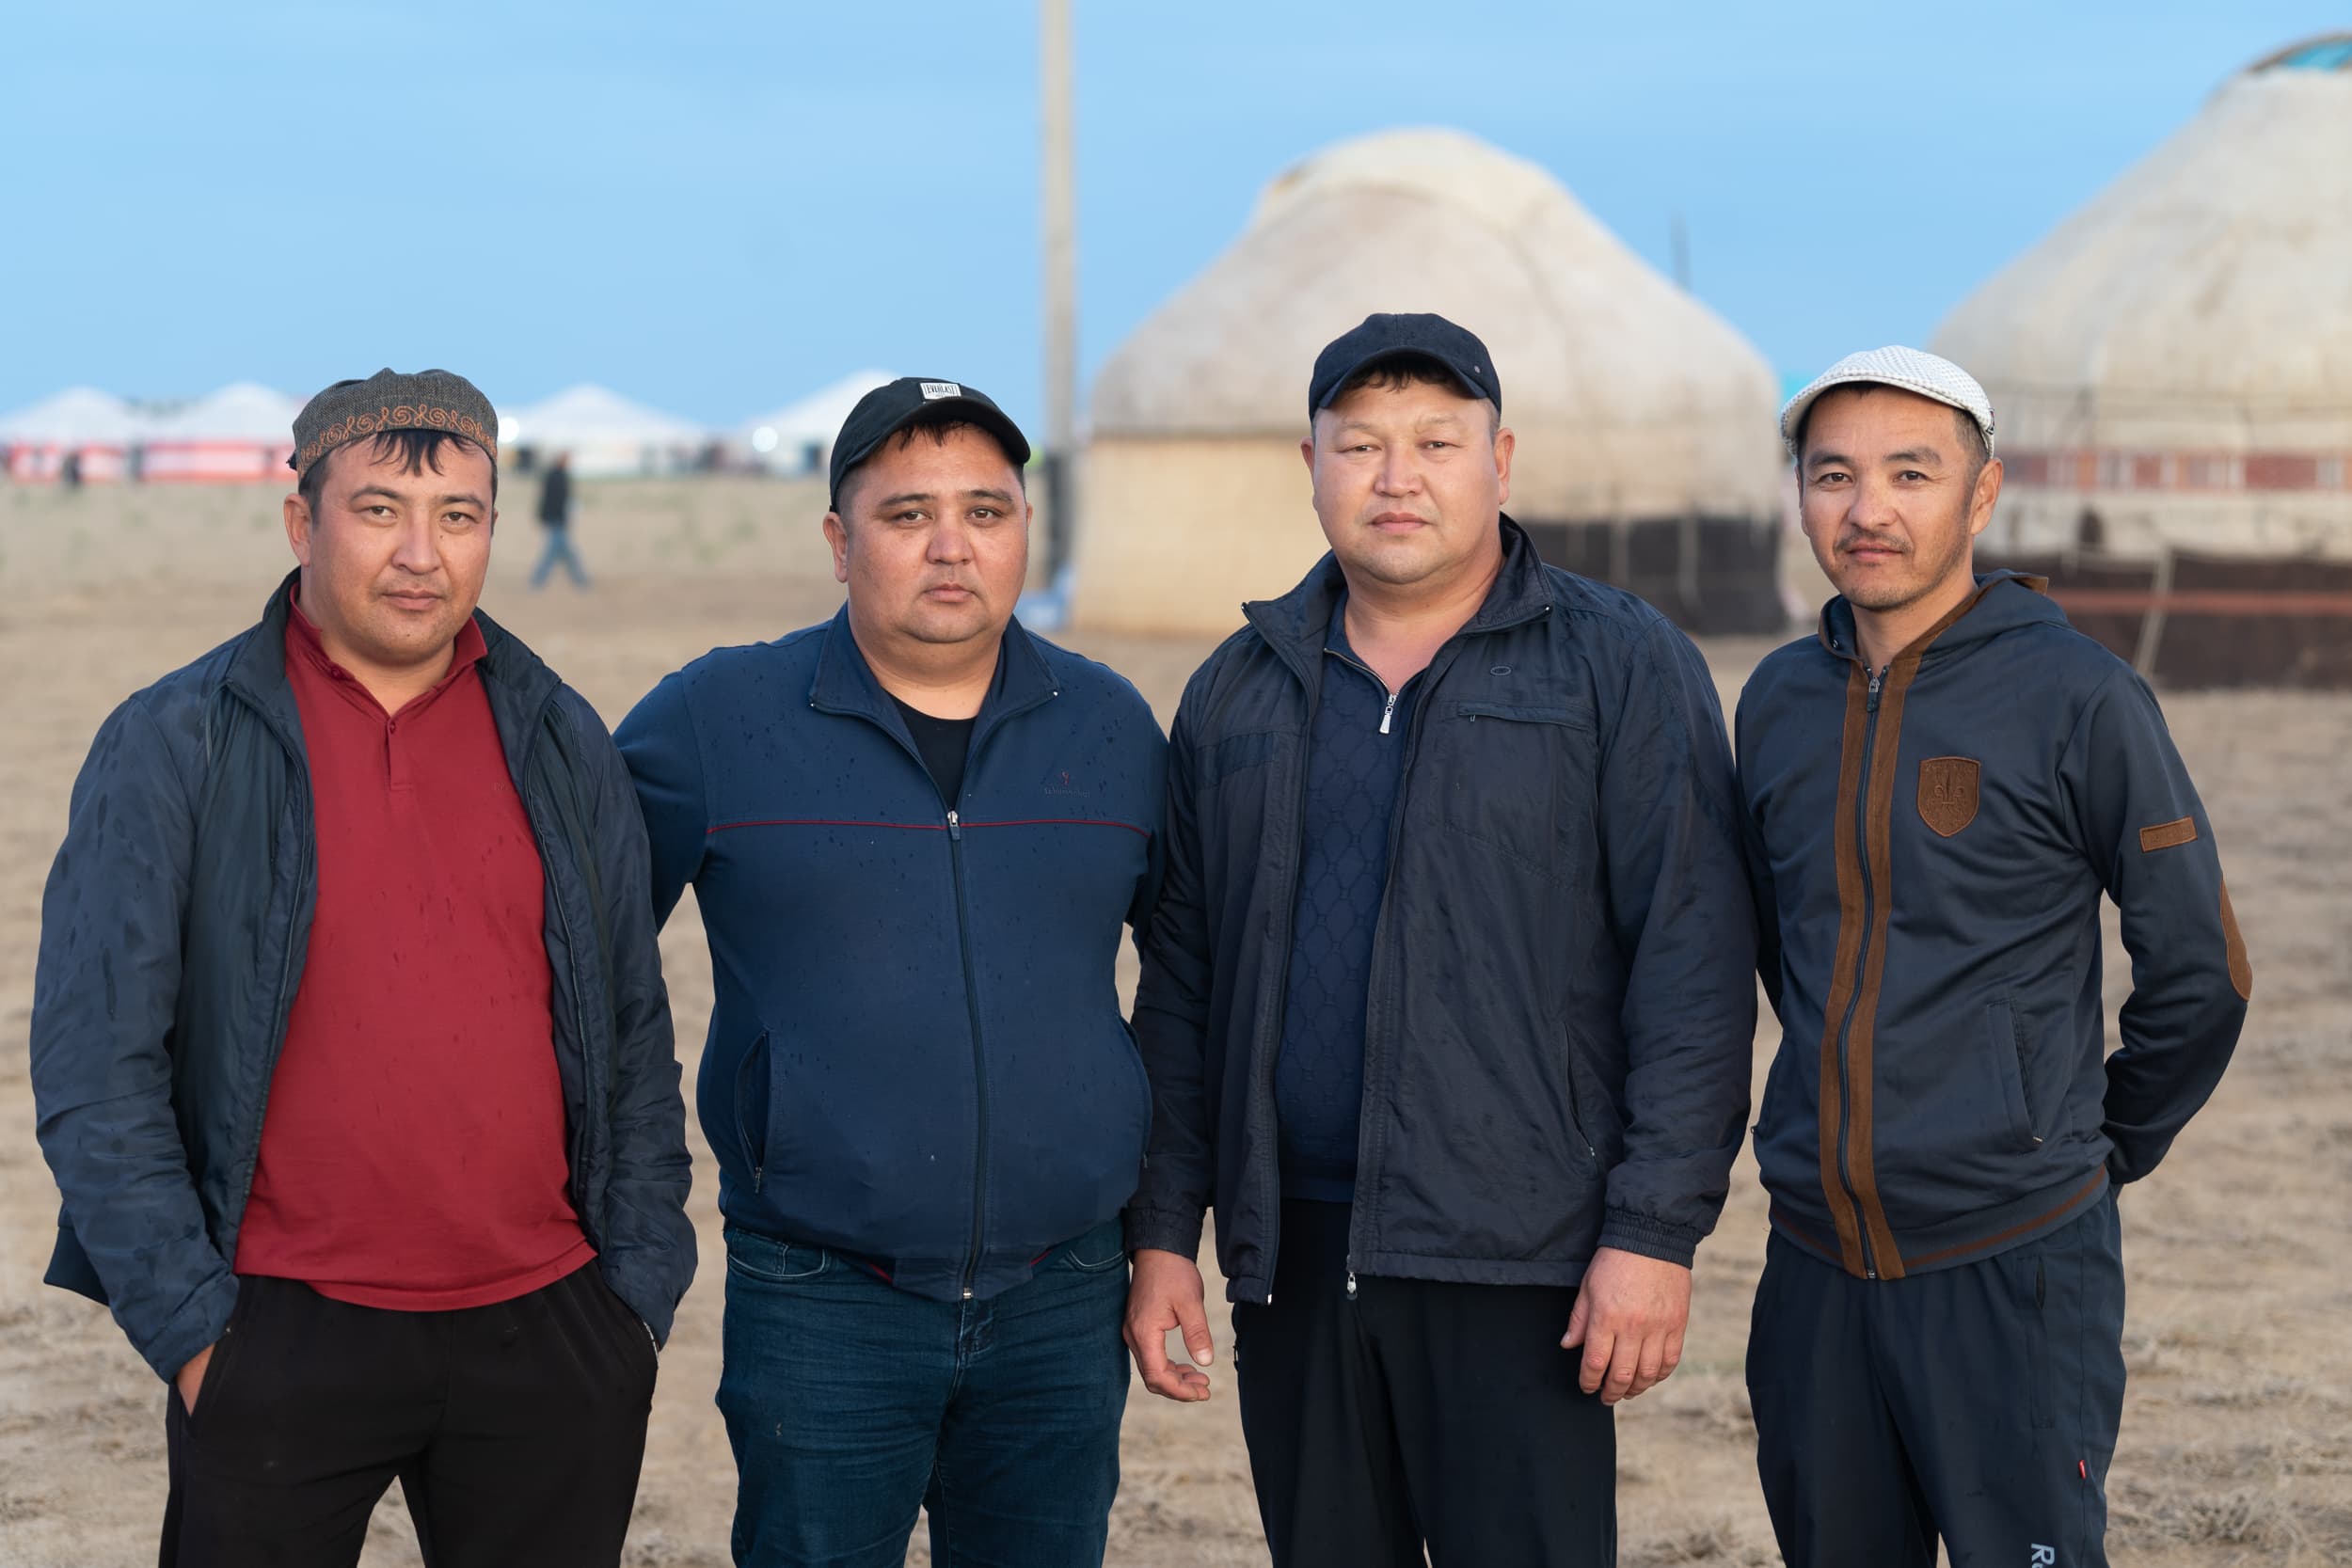 Kazakh men portrait